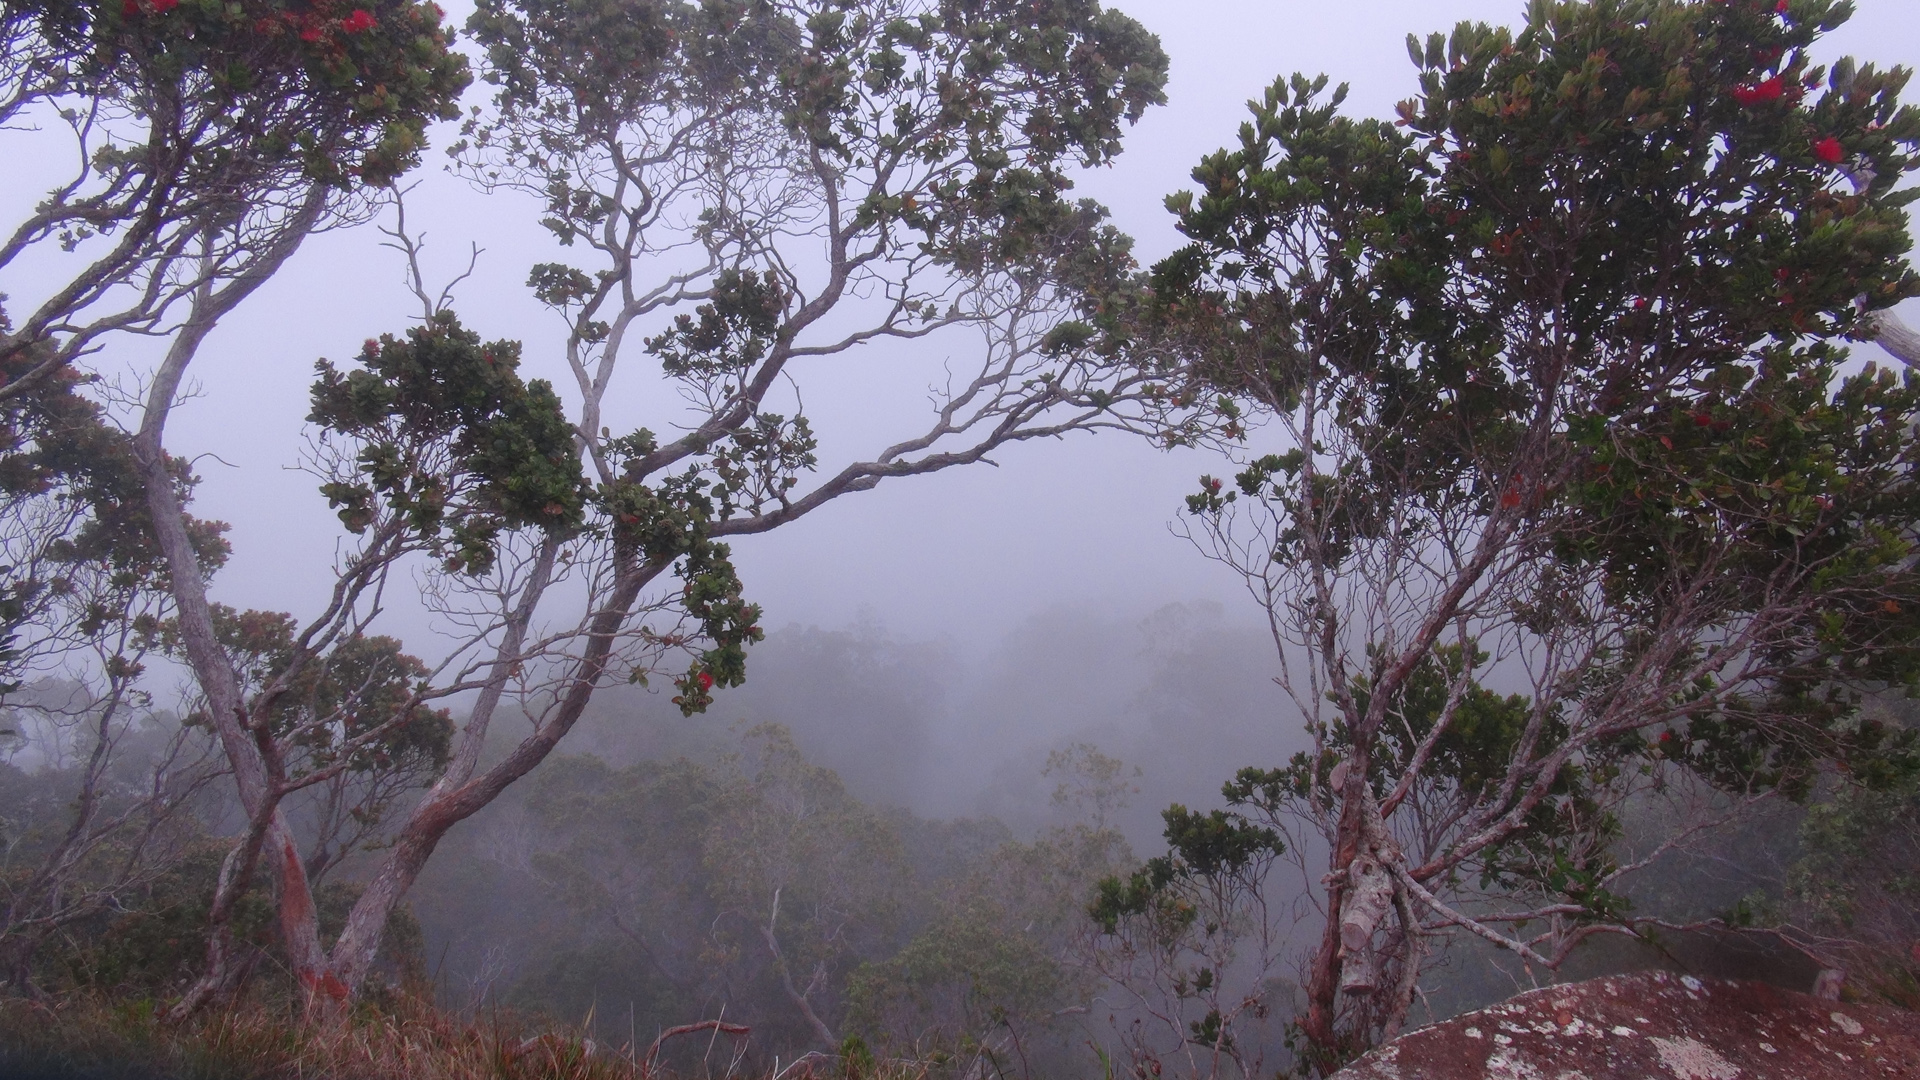 Kalalau Valley, fog rolling in